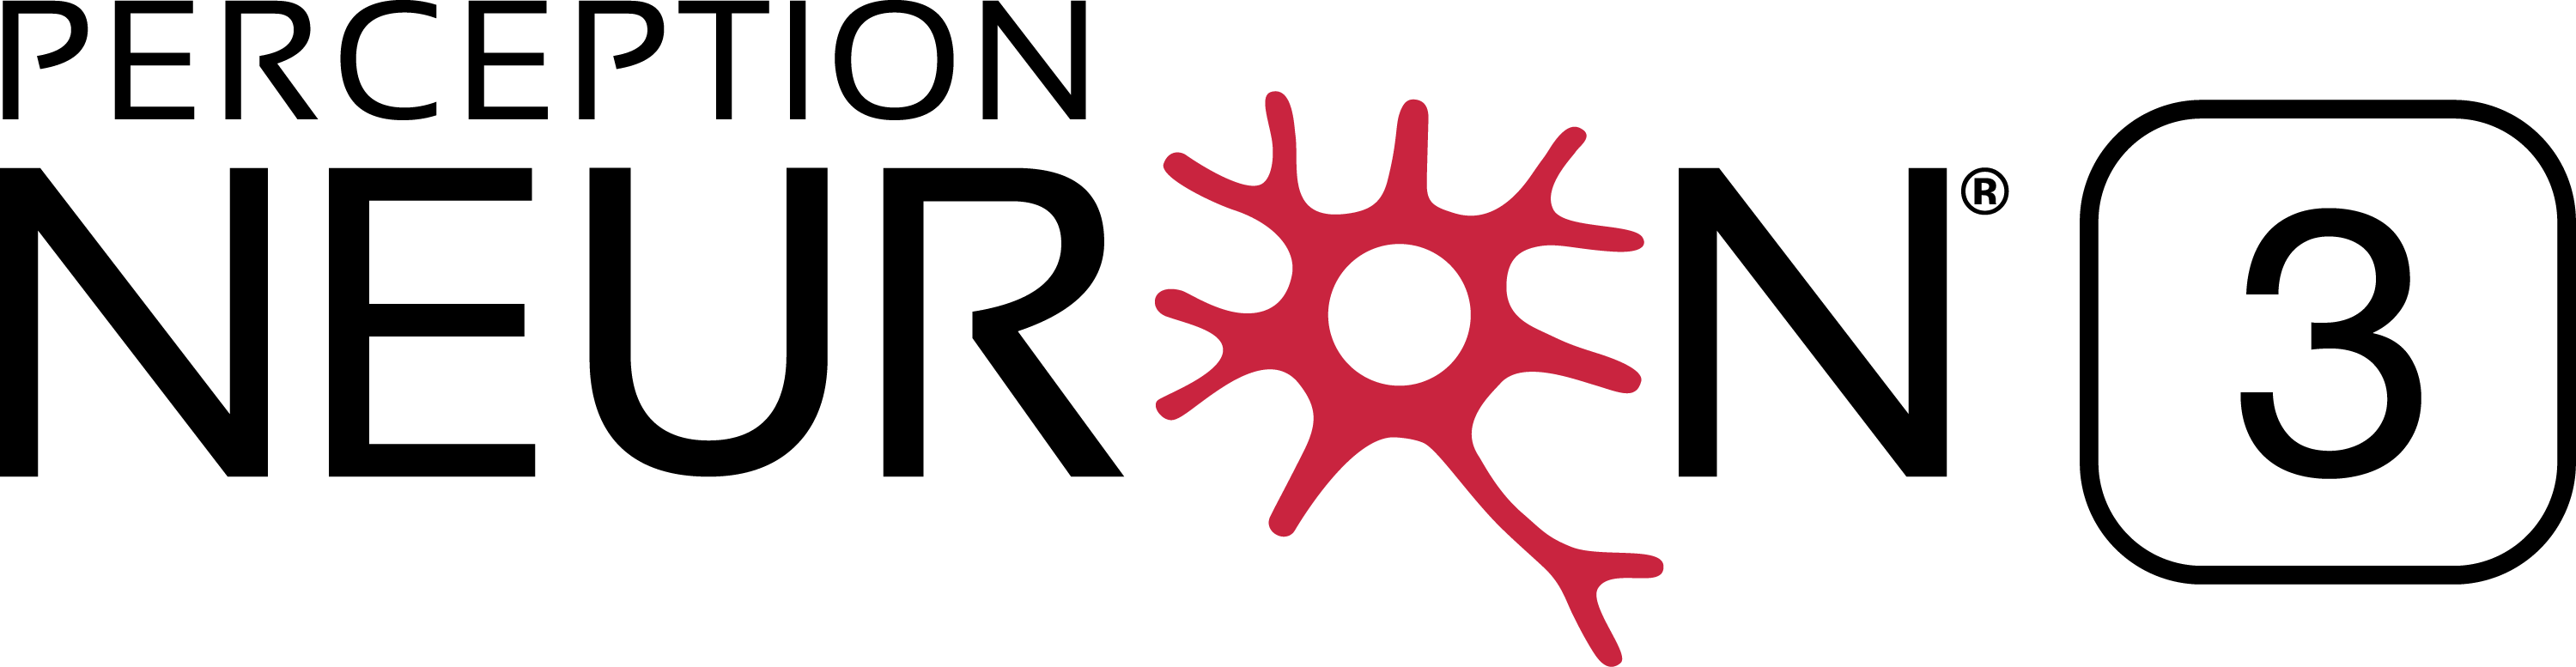 Perception Neuron 3 Motion Capture System Logo